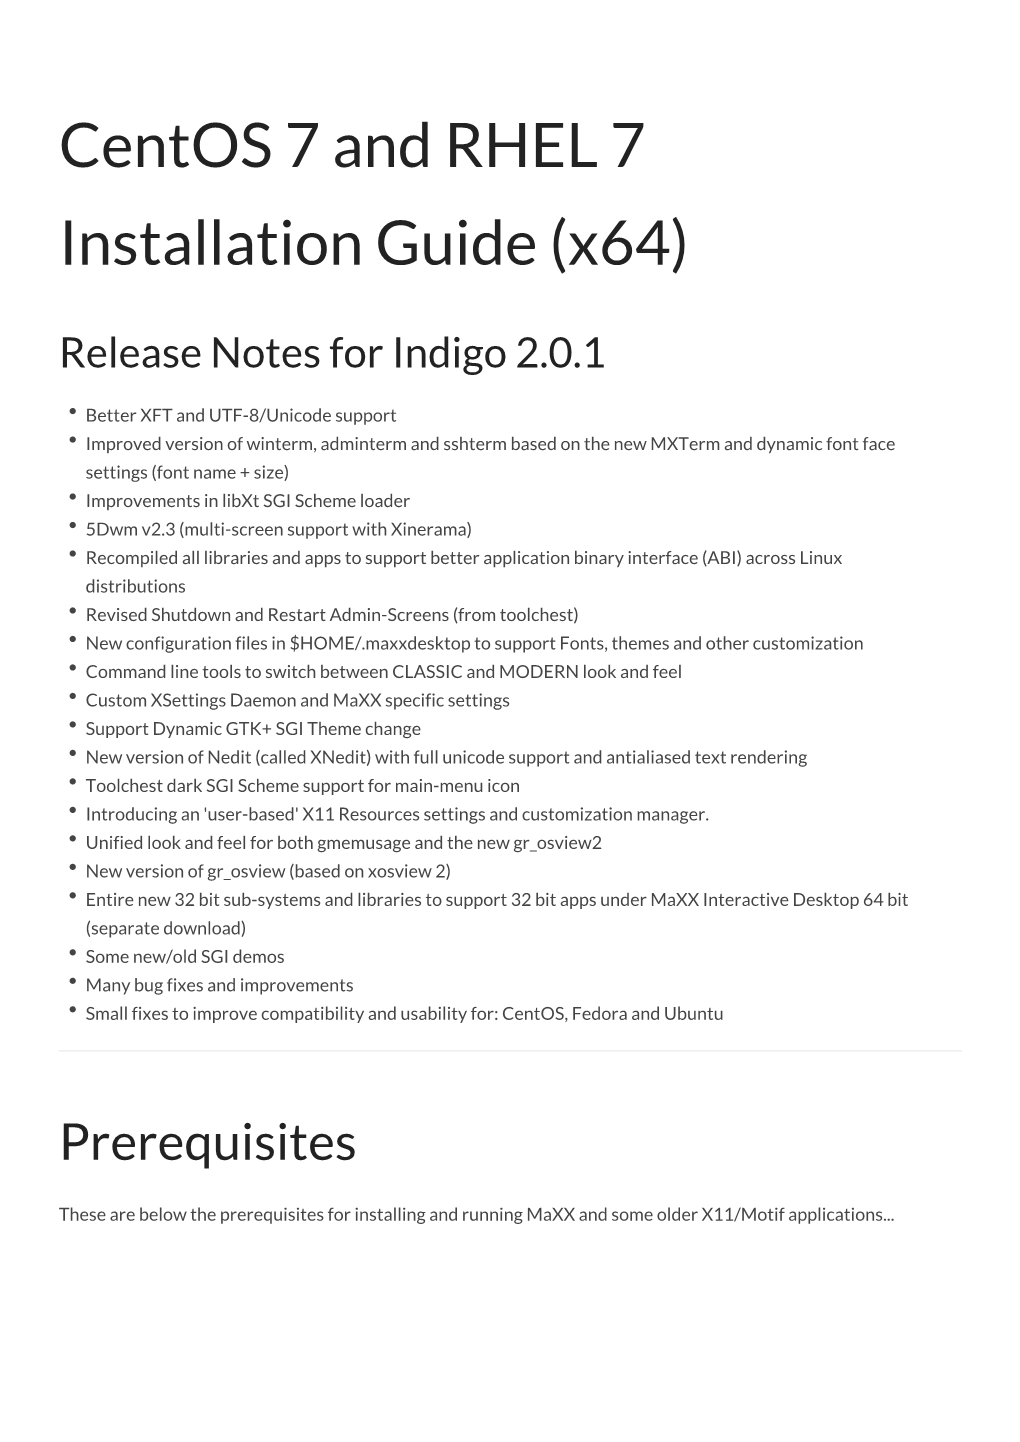 Centos 7 and RHEL 7 Installation Guide (X64)